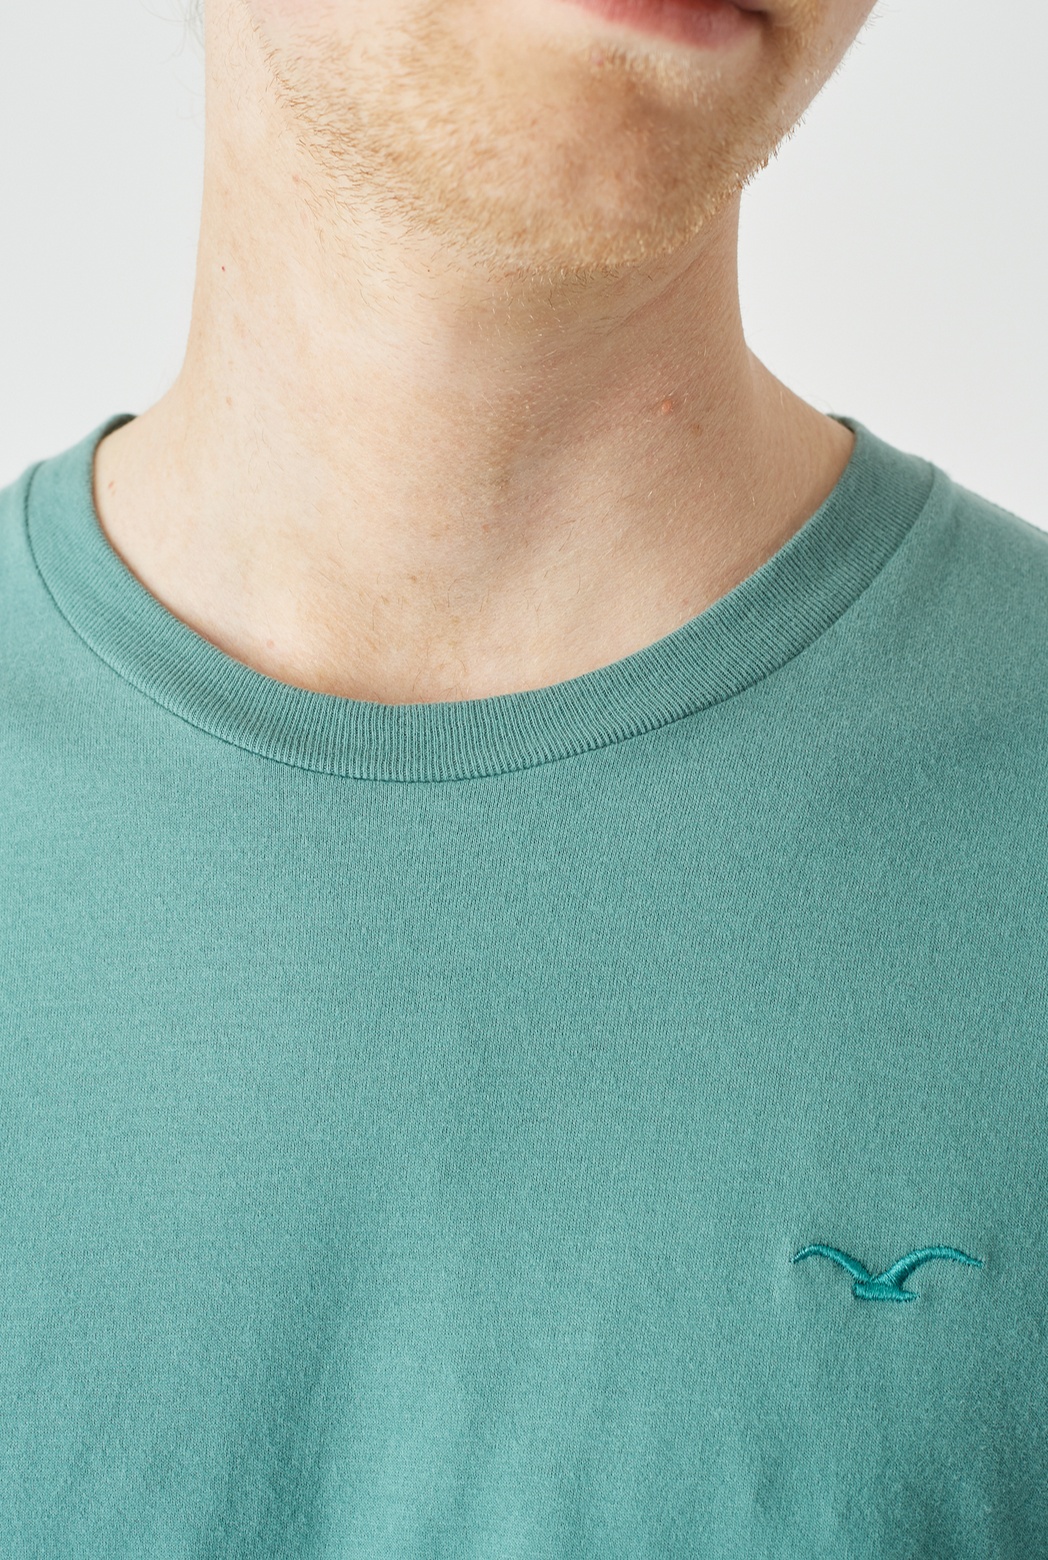 Cleptomanicx veganes T-Shirt BASIC TEE LIGULL REGULAR in blau | Le Shop  Vegan - vegane Mode und Accessoires | T-Shirts